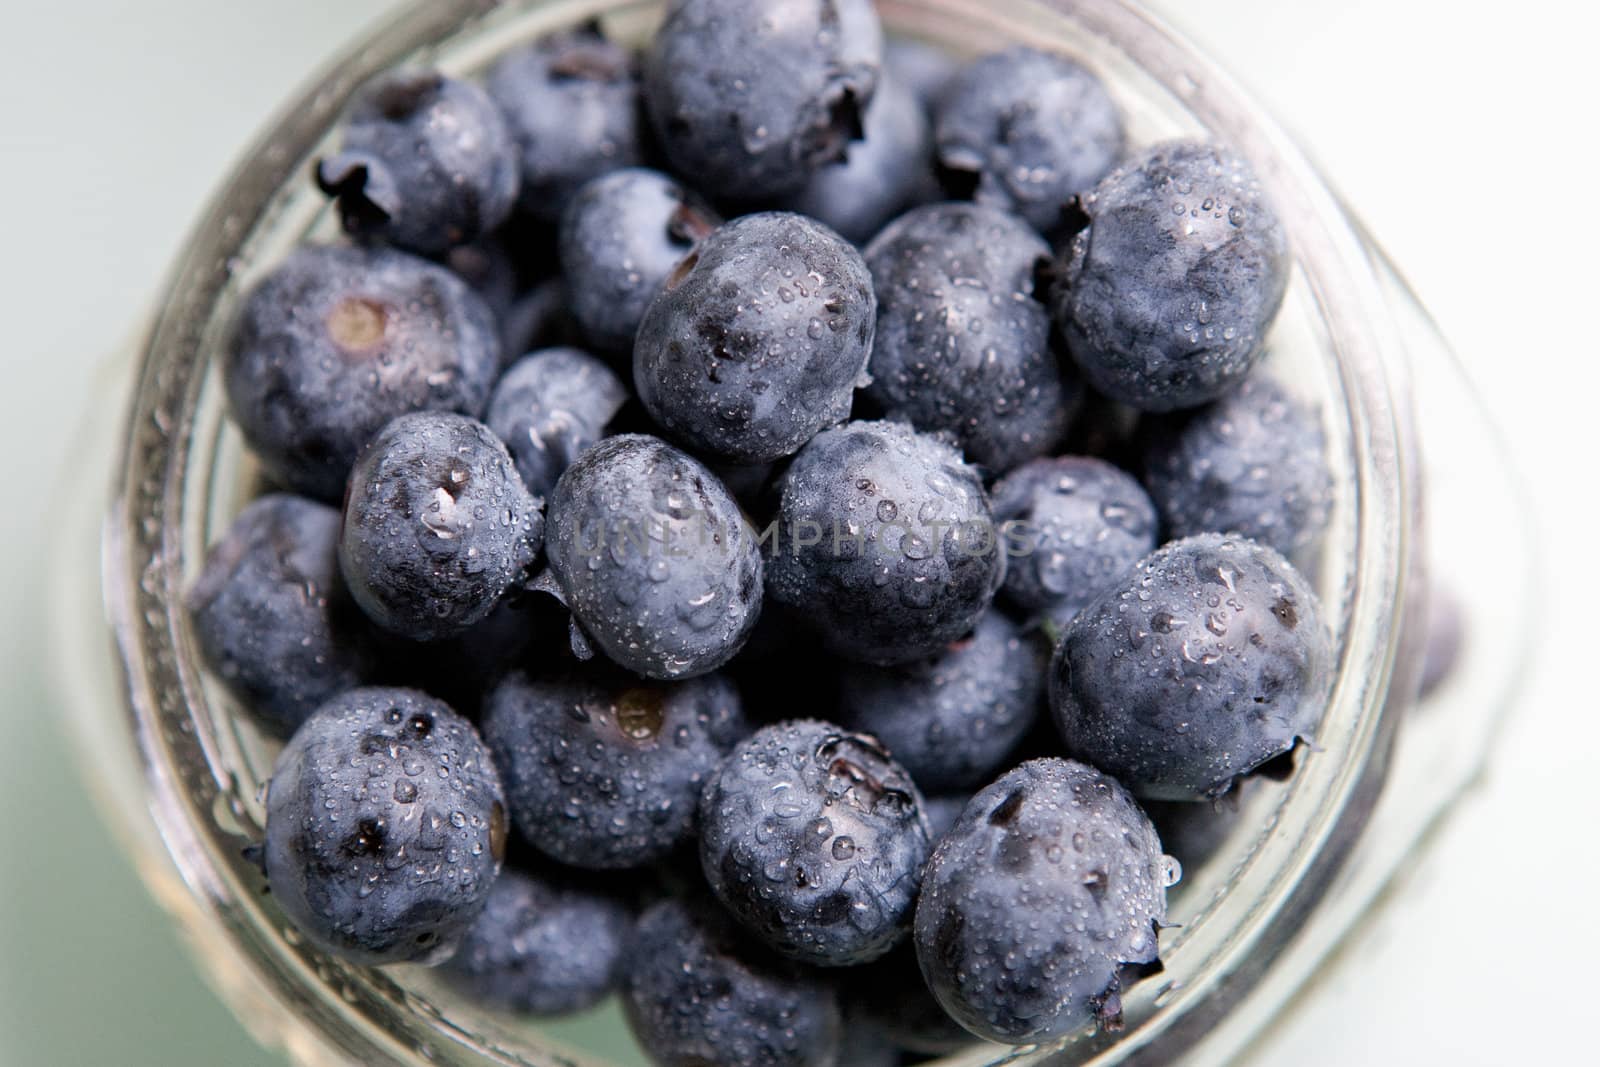 Bunch of fresh, misty blueberries